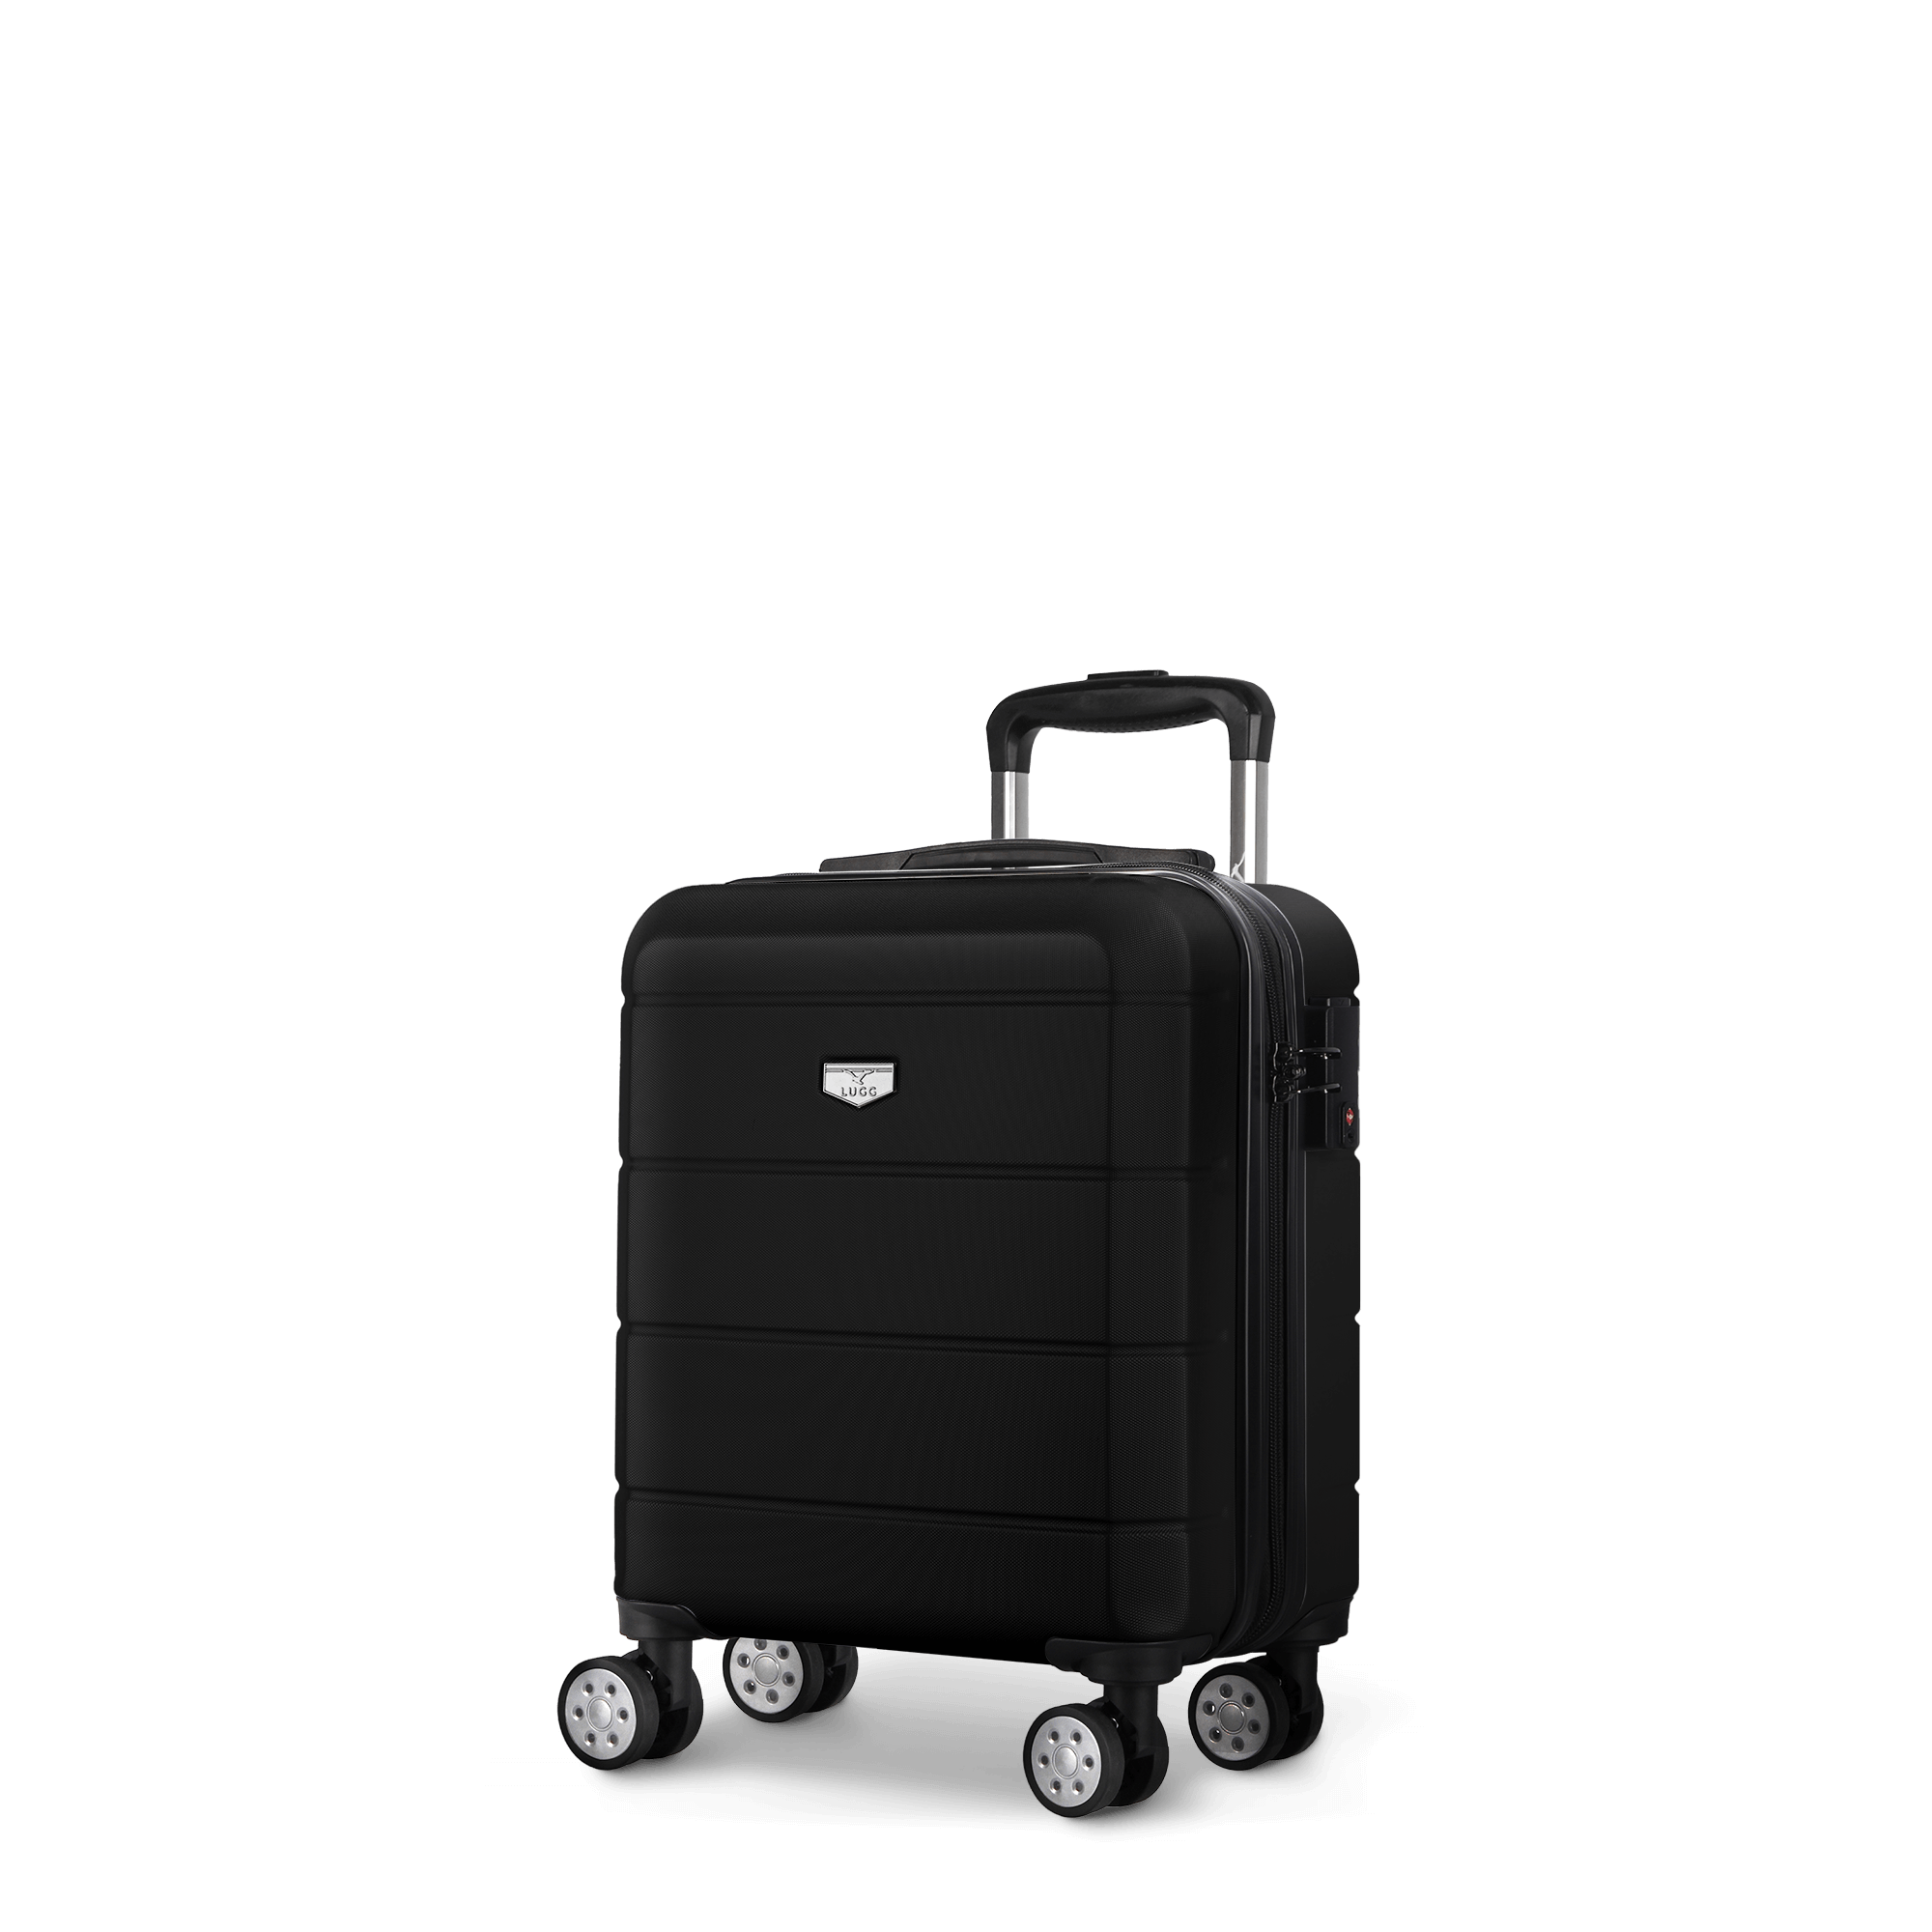 Jetset Cabin Suitcase in Black